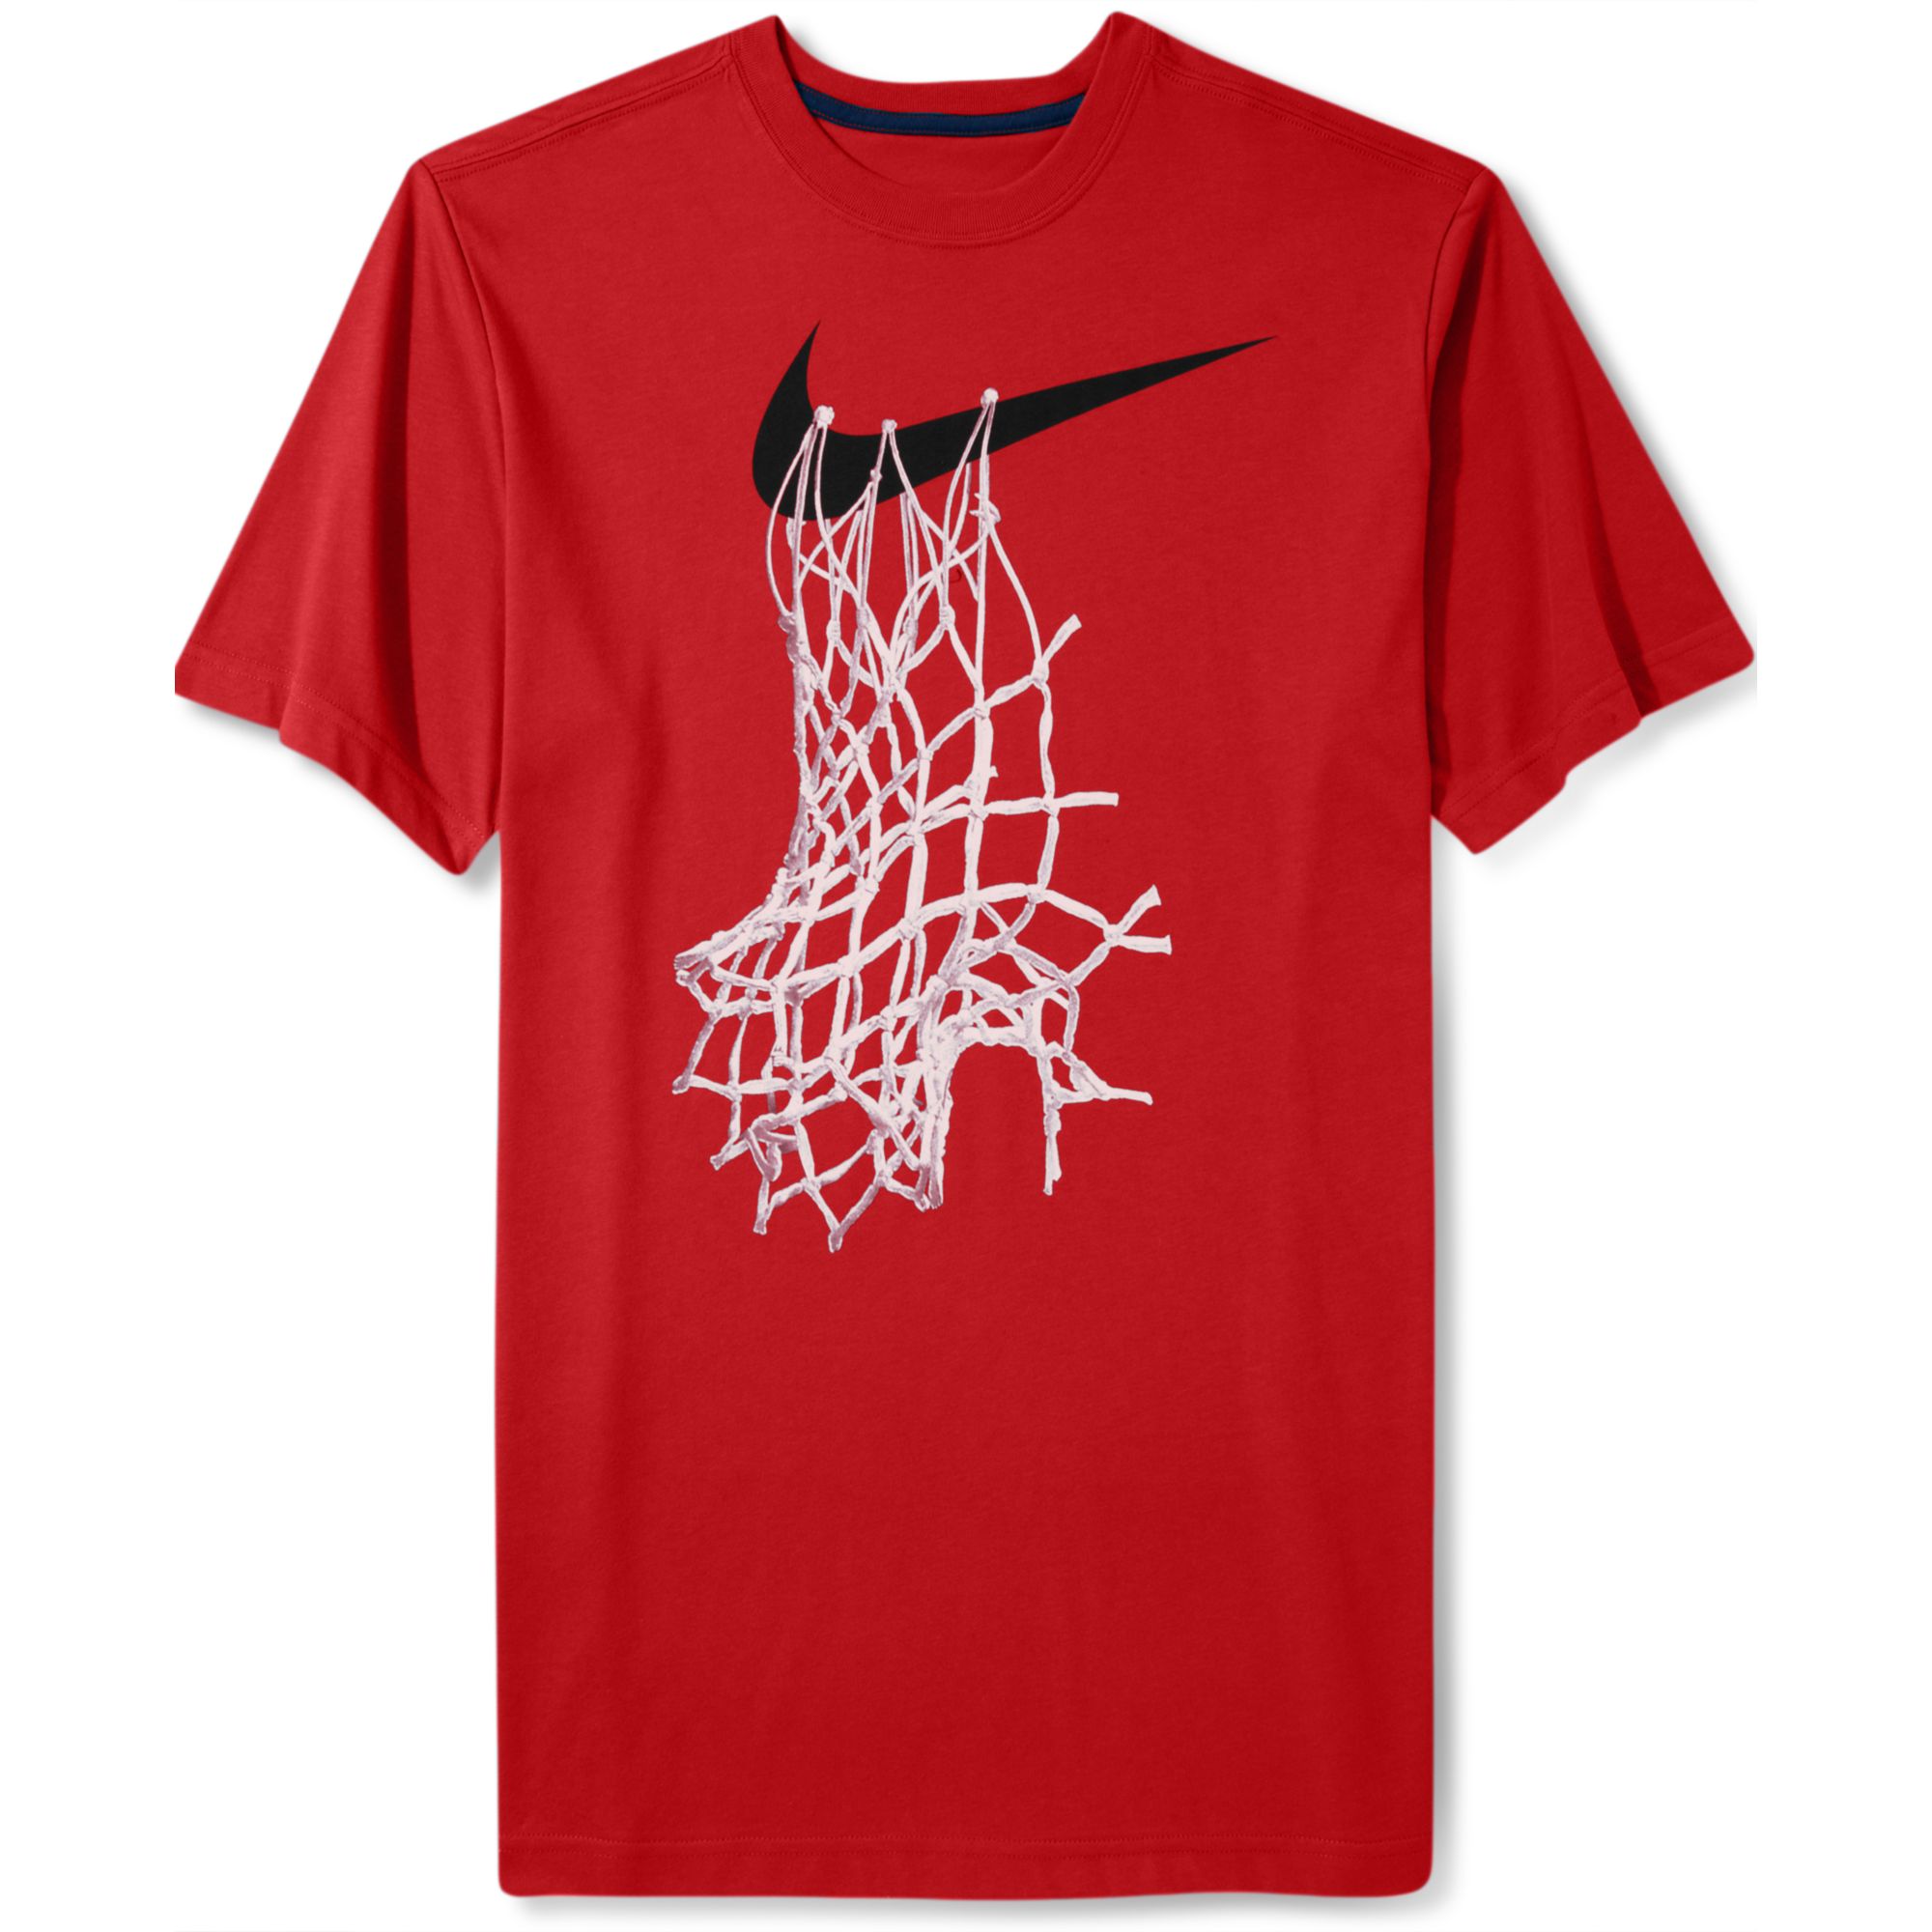 Футболка шнуровка. Nike Basketball t Shirt Red. Футболка Nike Basketball. Футболка найк баскетбол. Баскетбольная футболка с рукавами.